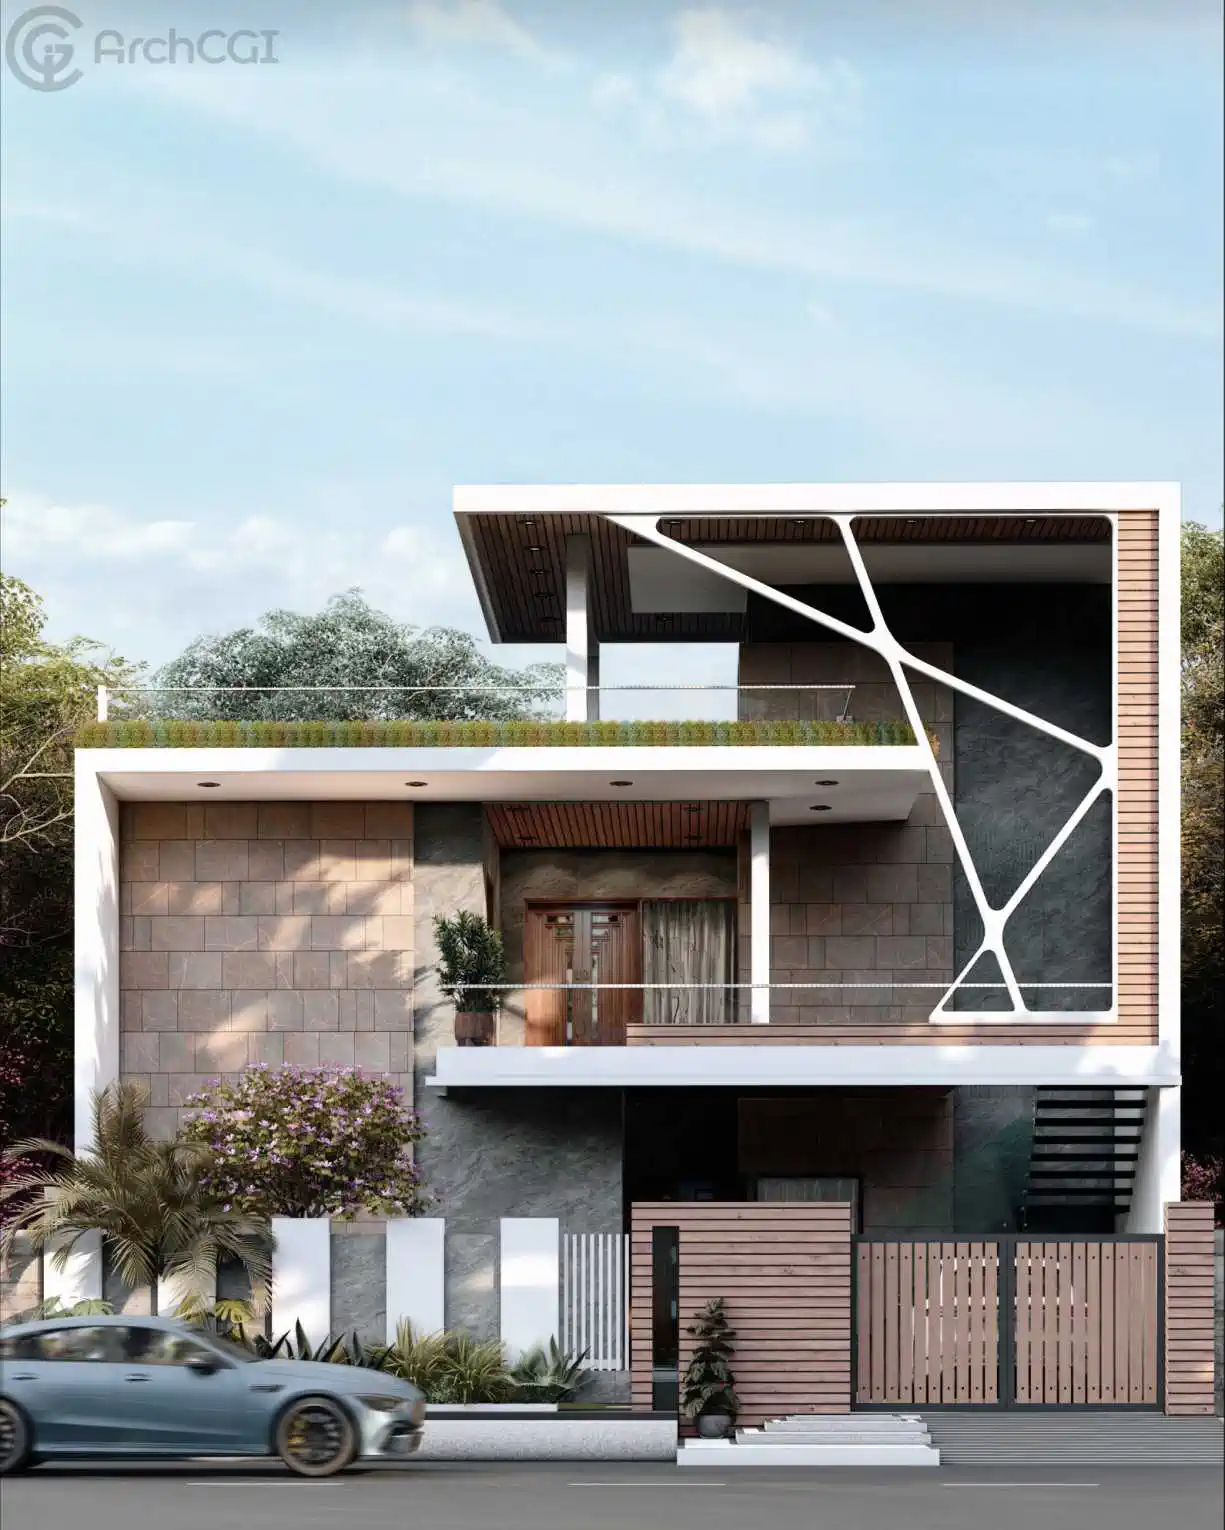 3D Contemporary, Vibrant and Creative House Design | Unique Exterior | ArchCGI